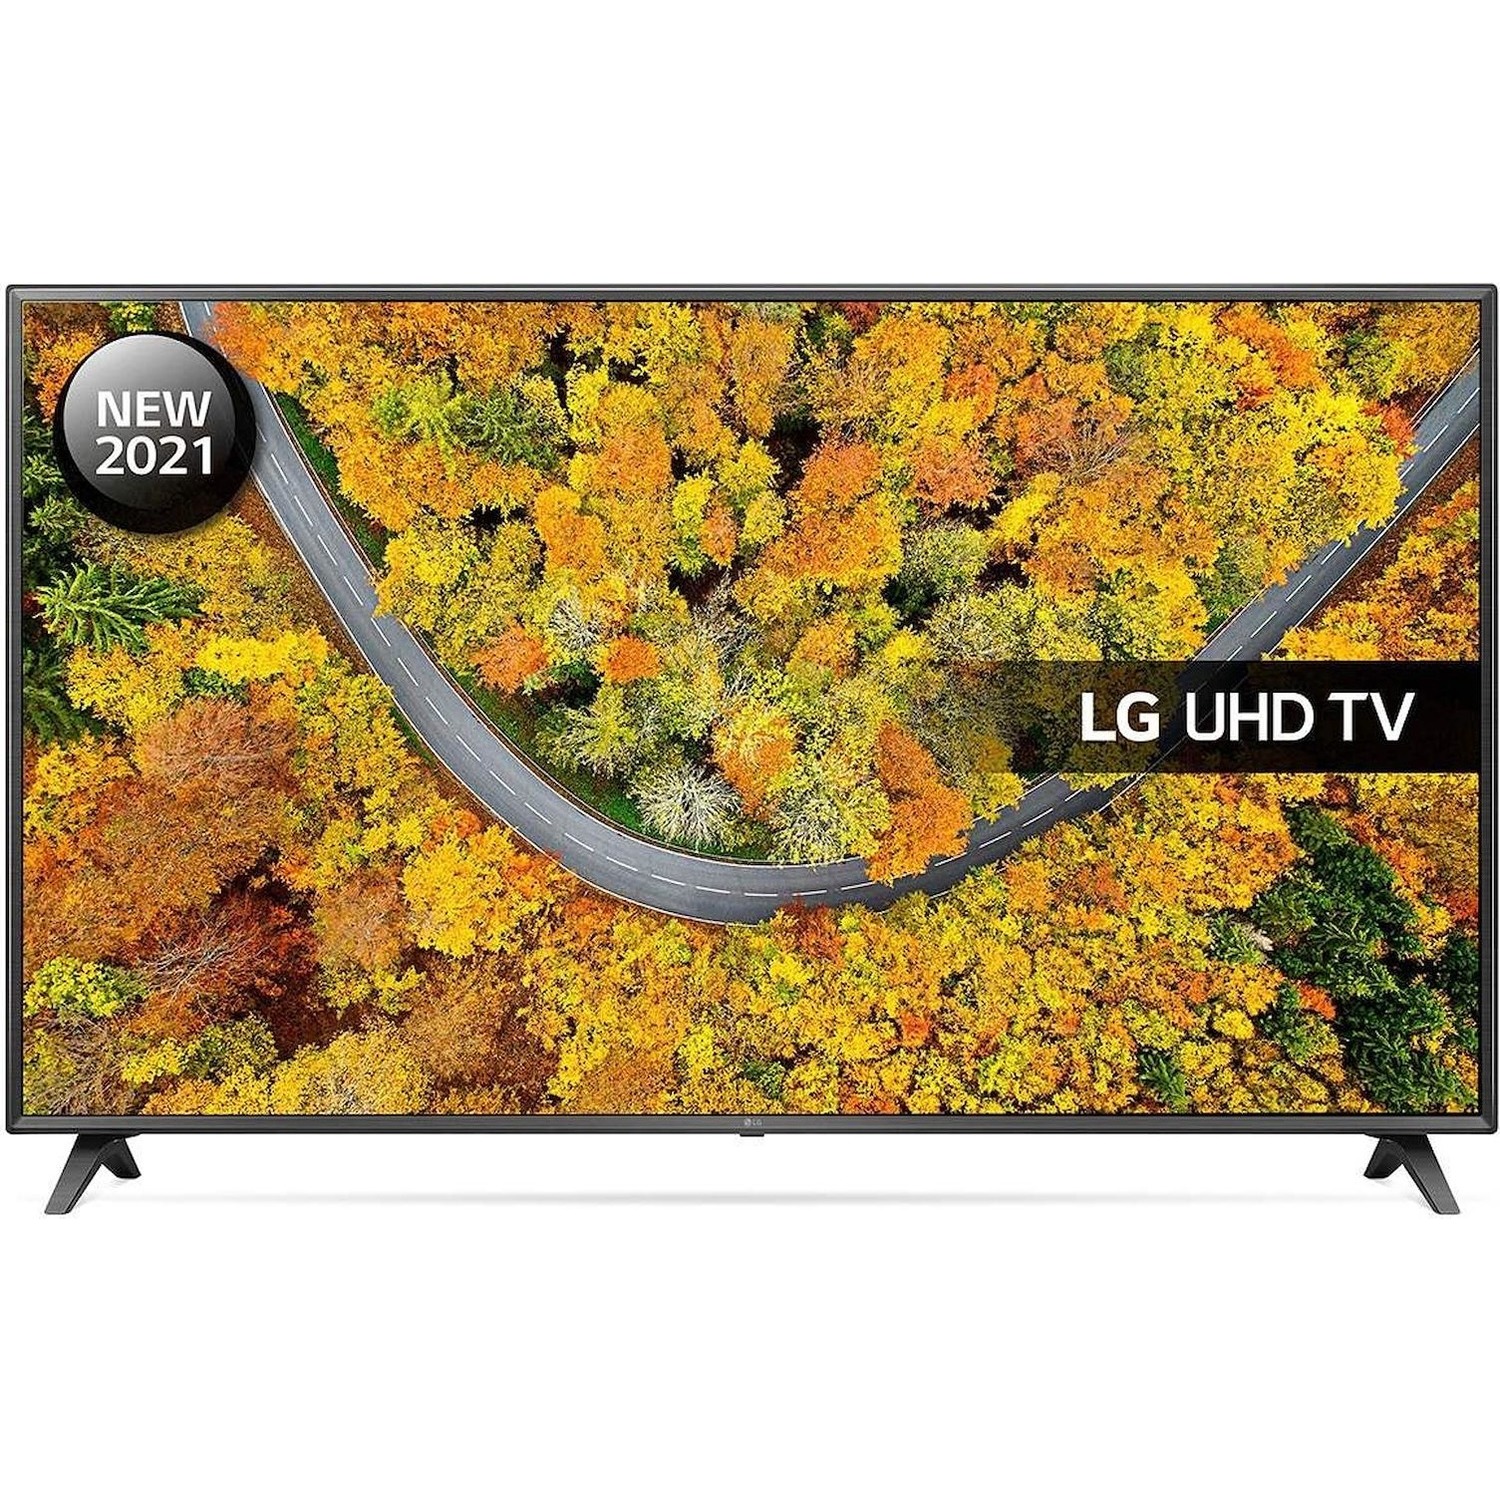 Immagine per TV LED Smart 4K UHD LG 55UP75006LF.APID da DIMOStore